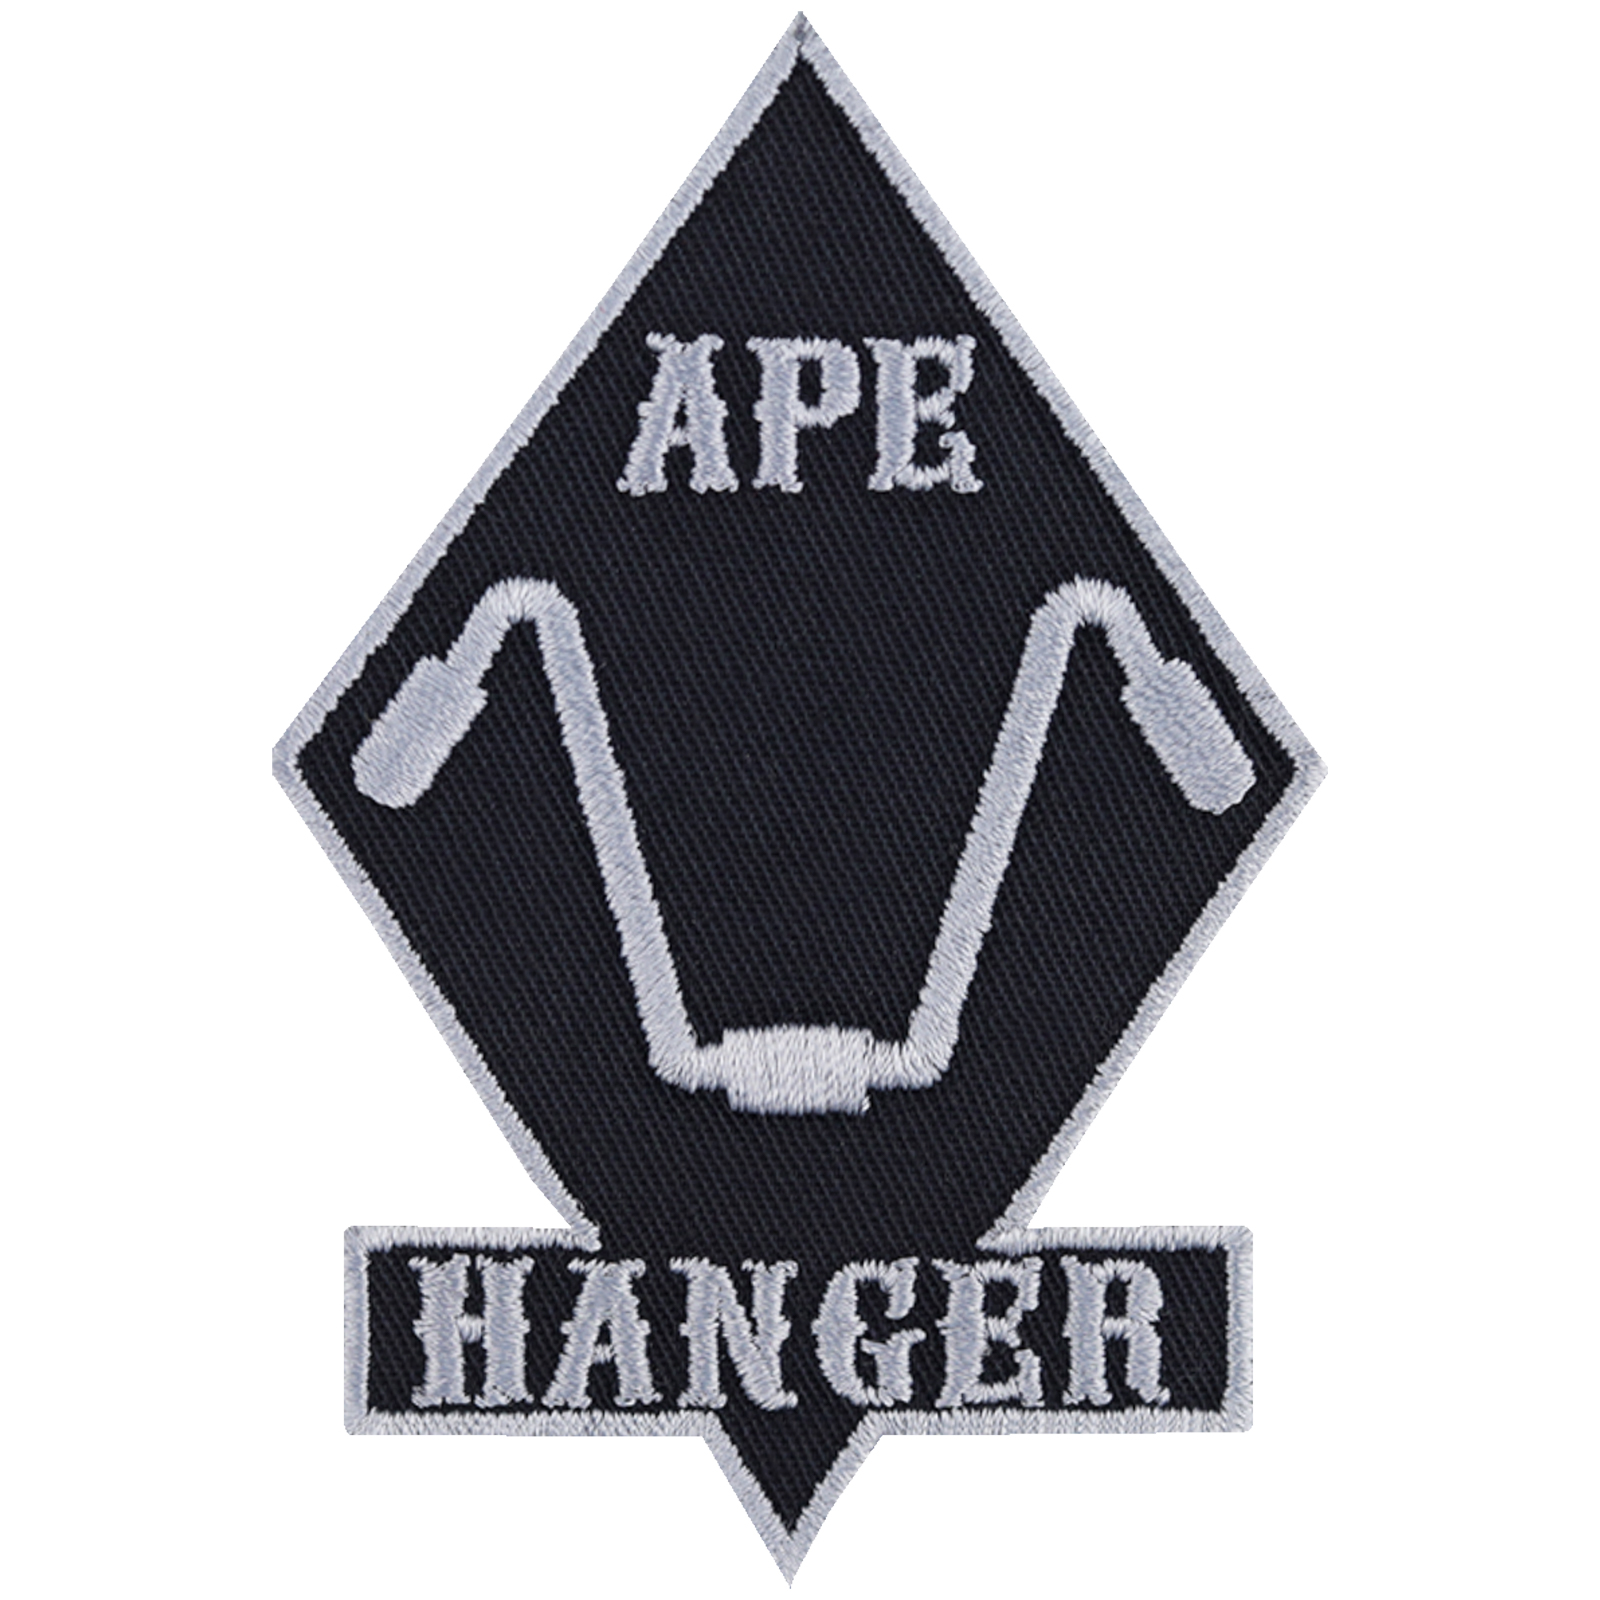 APE Hanger - Patch